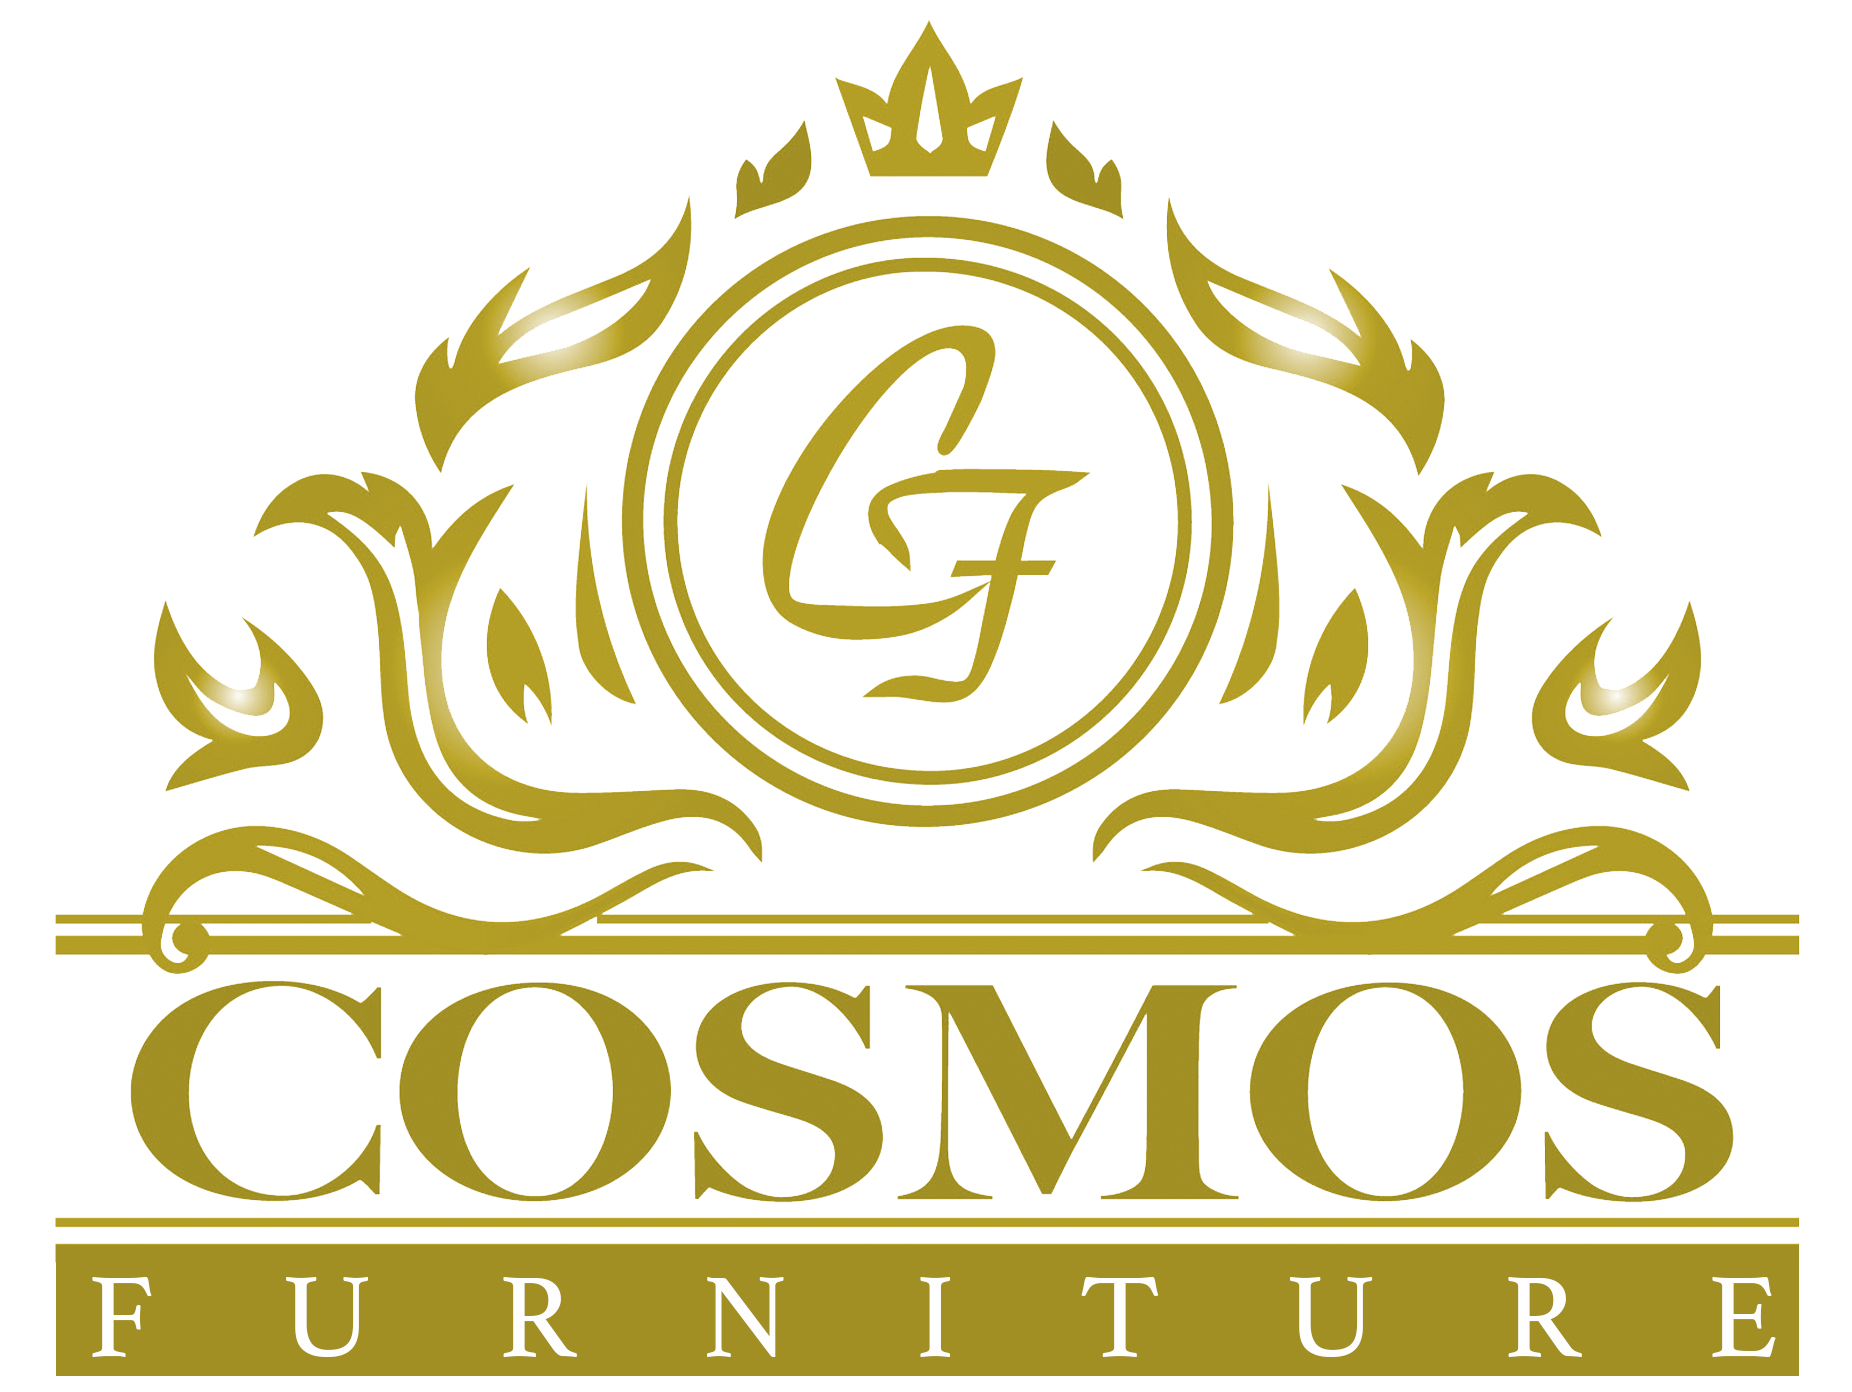 cosmost_logo